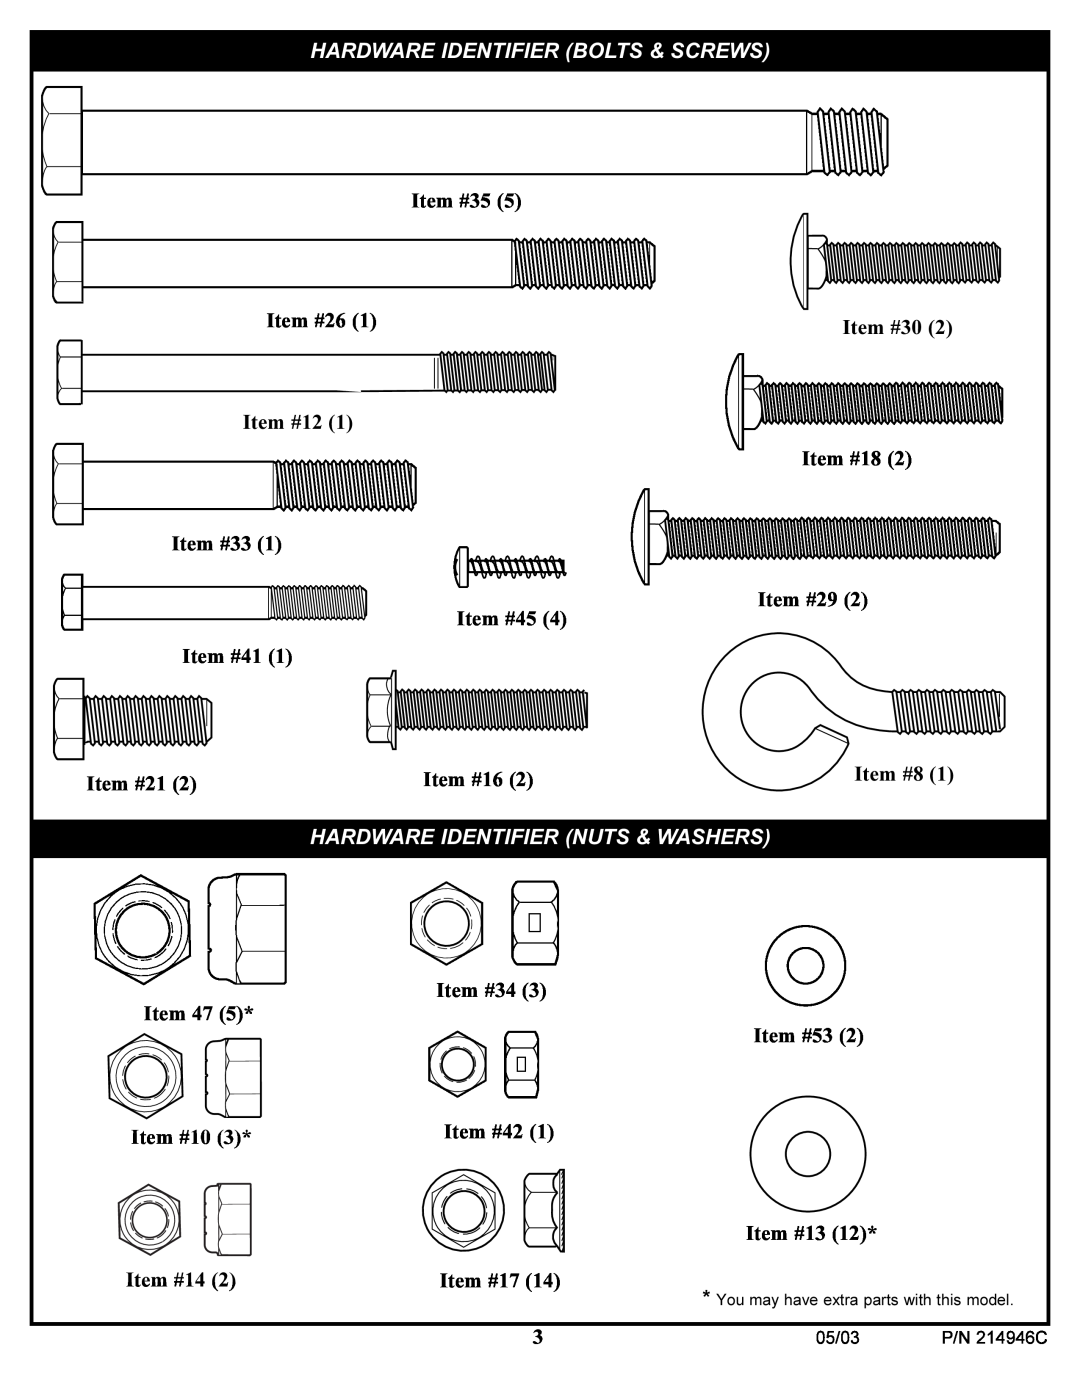 Huffy 214946C manual Hardware Identifier Bolts & Screws, Hardware Identifier Nuts & Washers 